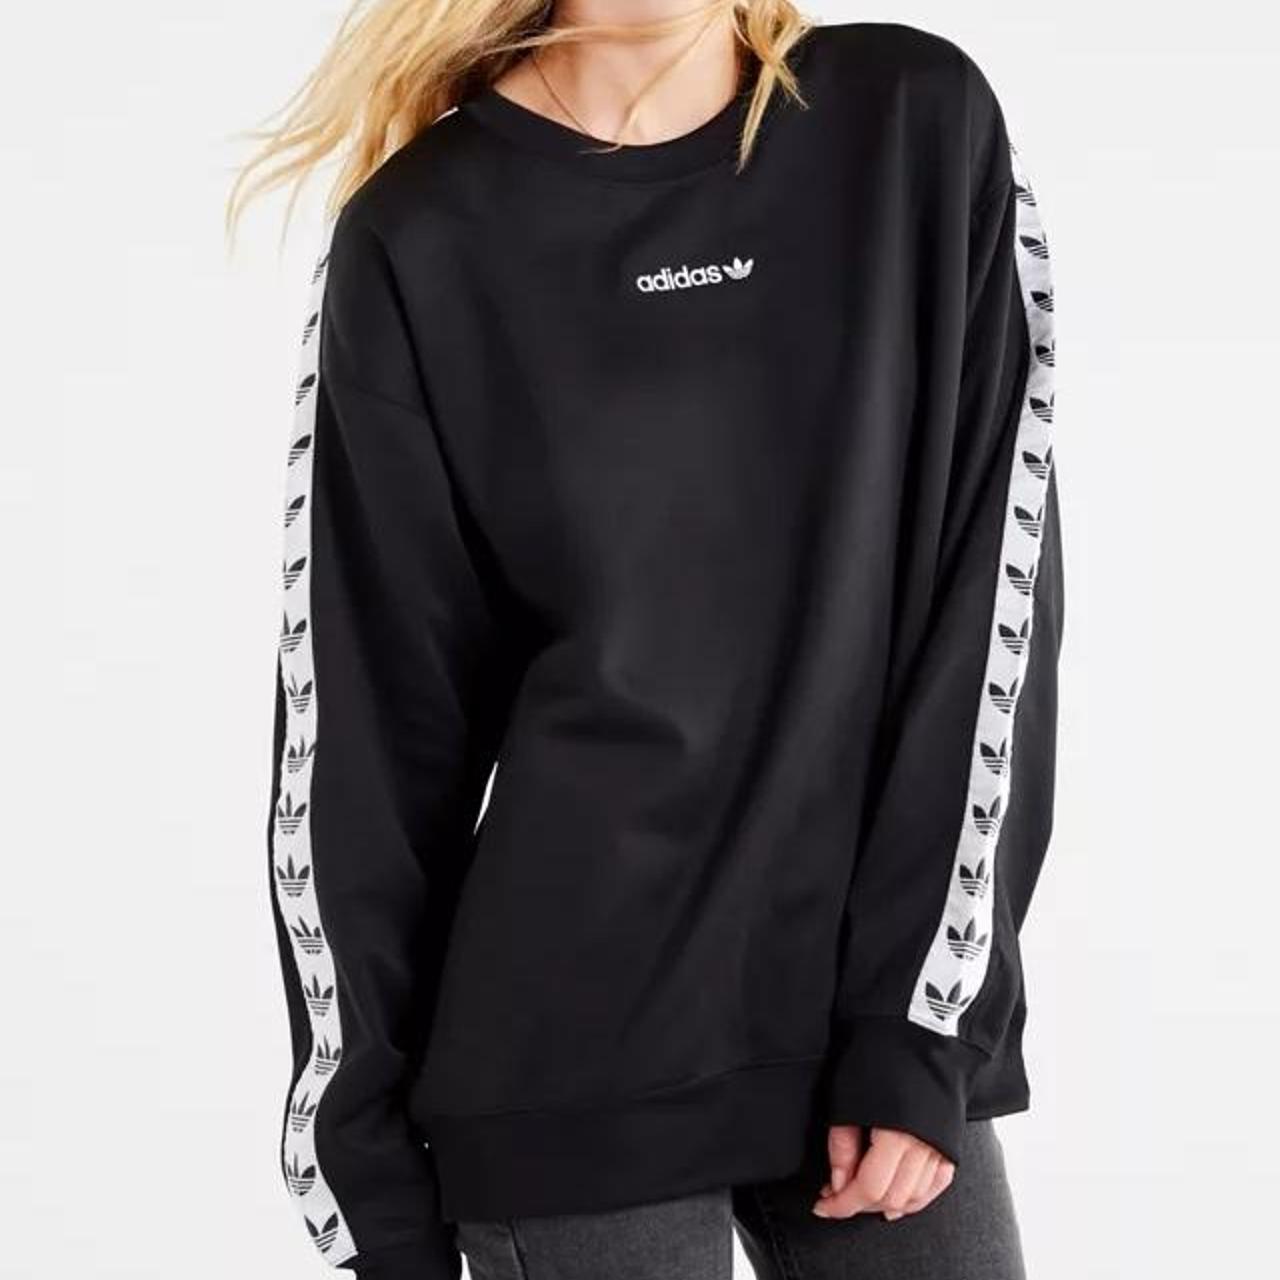 Adidas Originals Depop Sweatshirt Crewneck Size:... - Taped